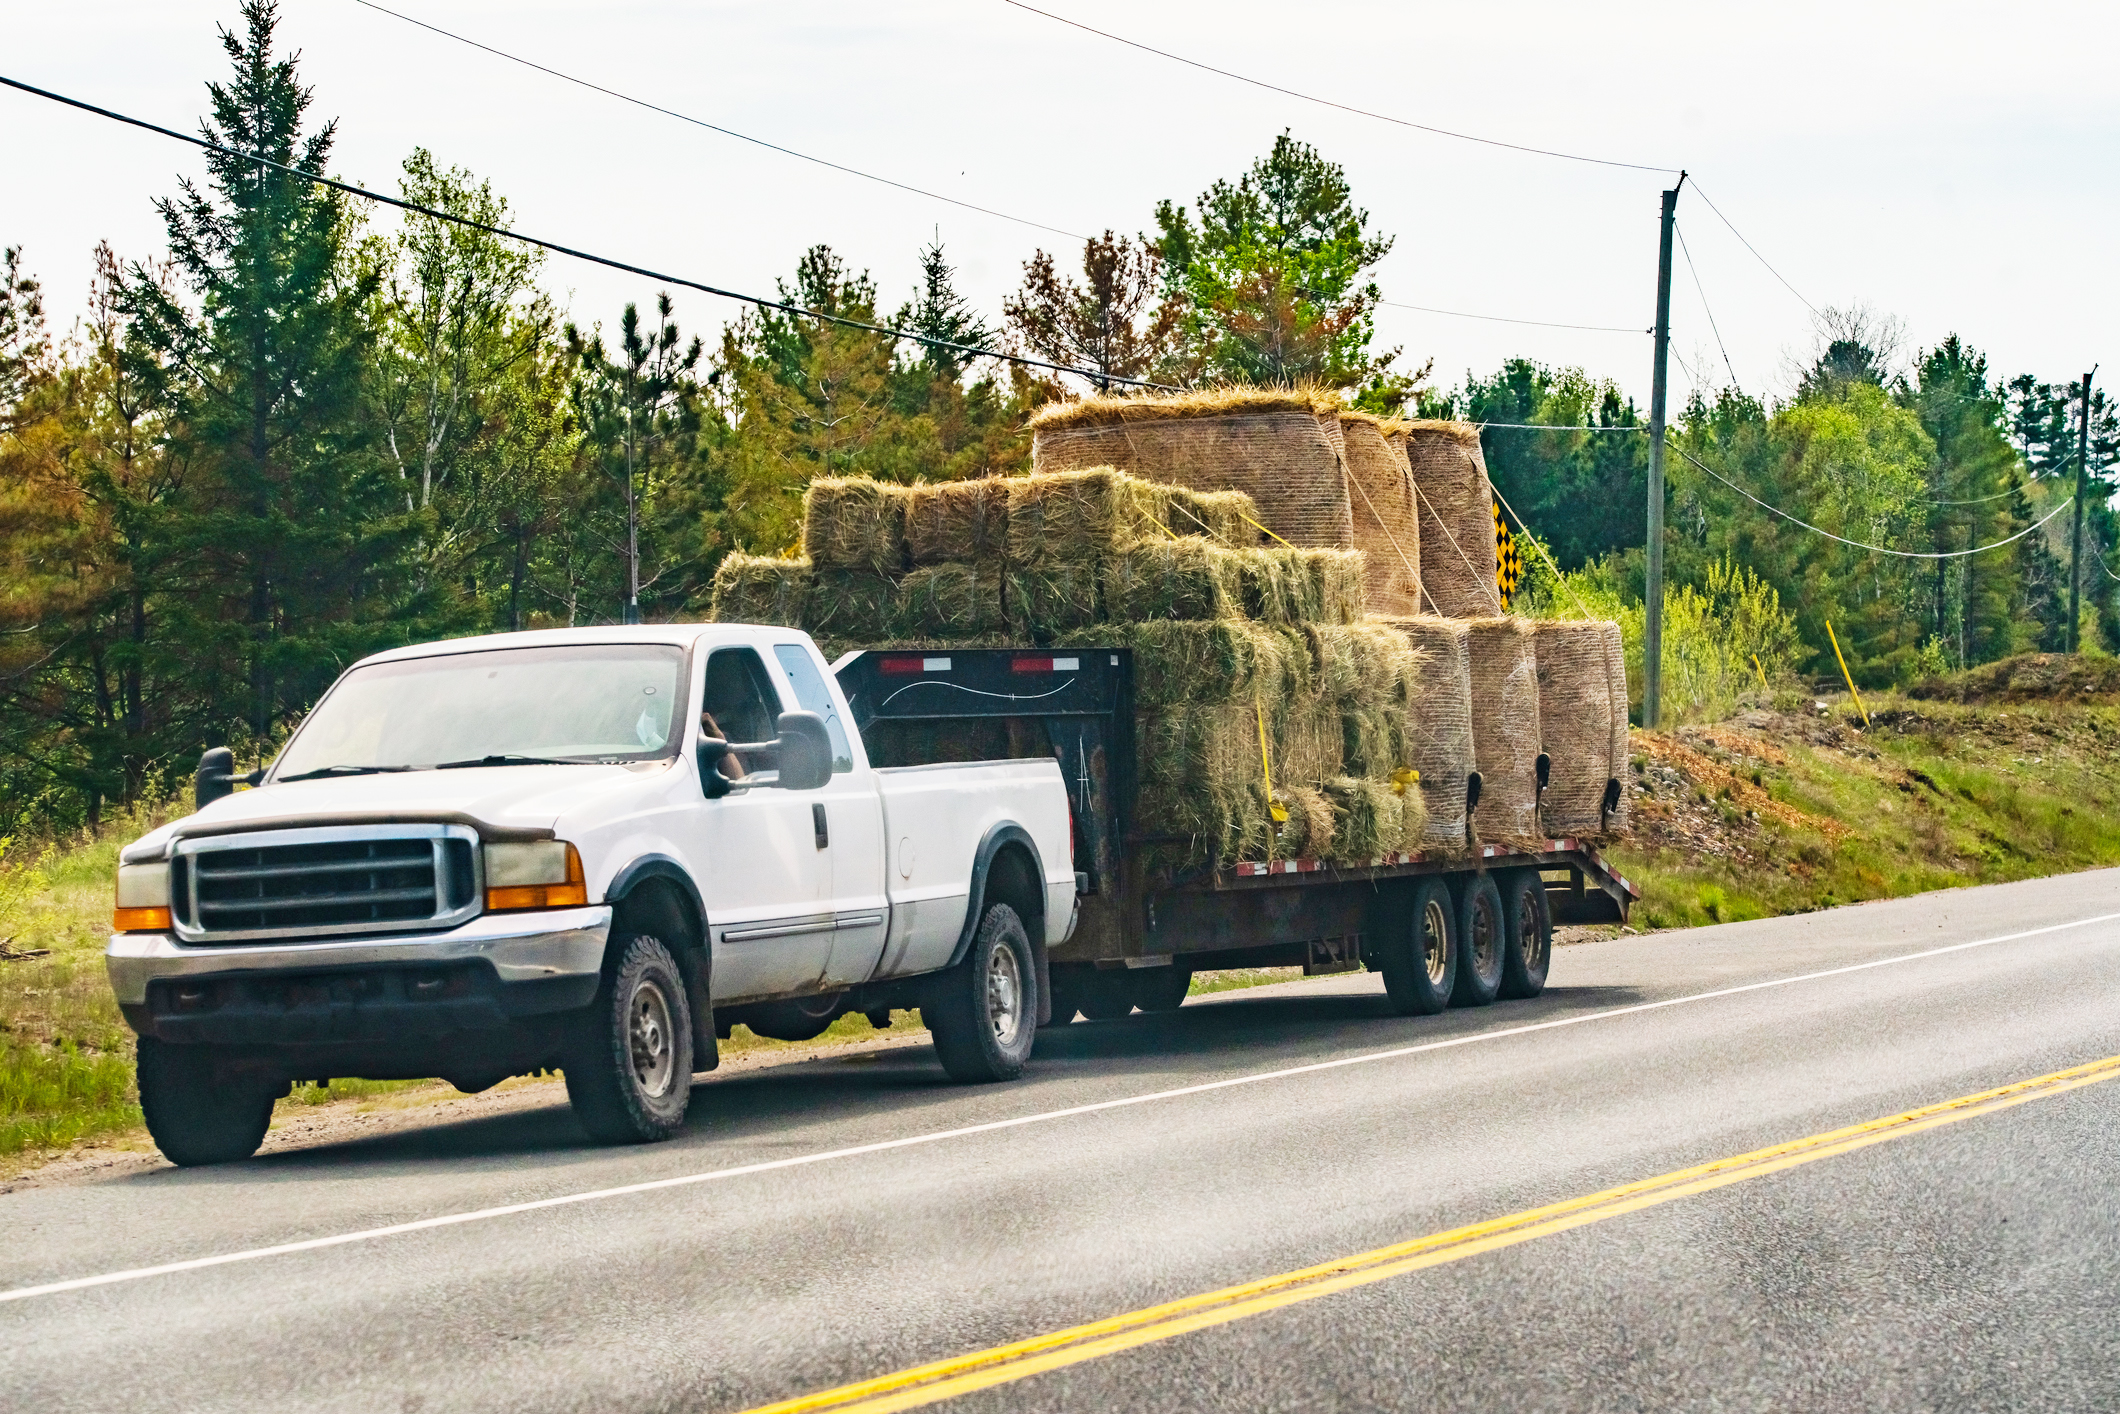 Pickup truck hauling hay